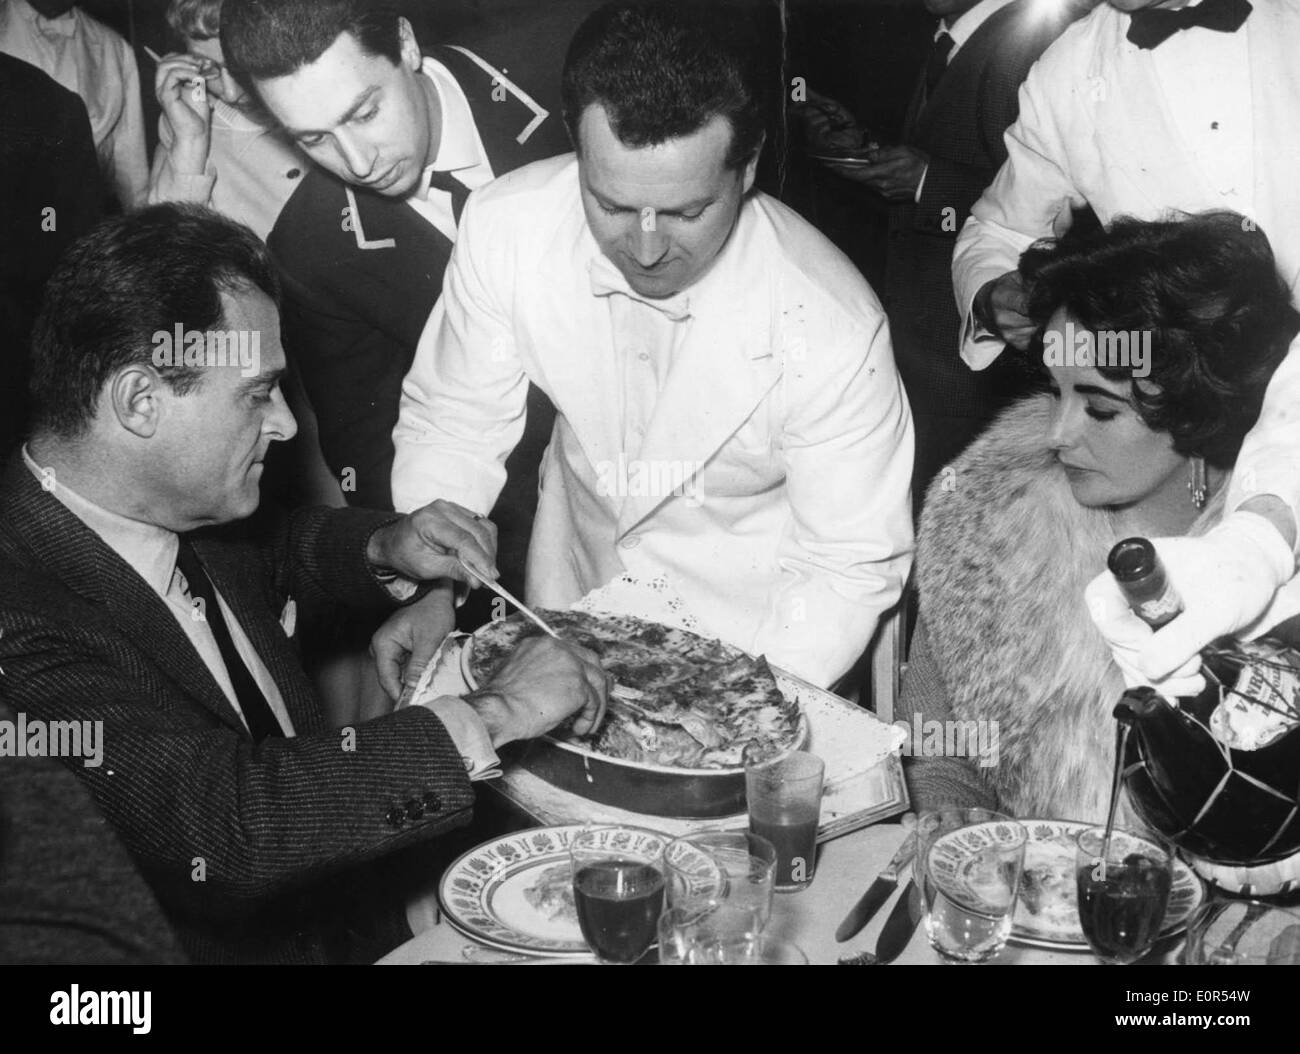 Febbraio 10, 1958 - Roma, Italia - Academy Award winning film leggenda ELIZABETH "" Liz Taylor 1932-2011 dines con suo marito, produ Foto Stock